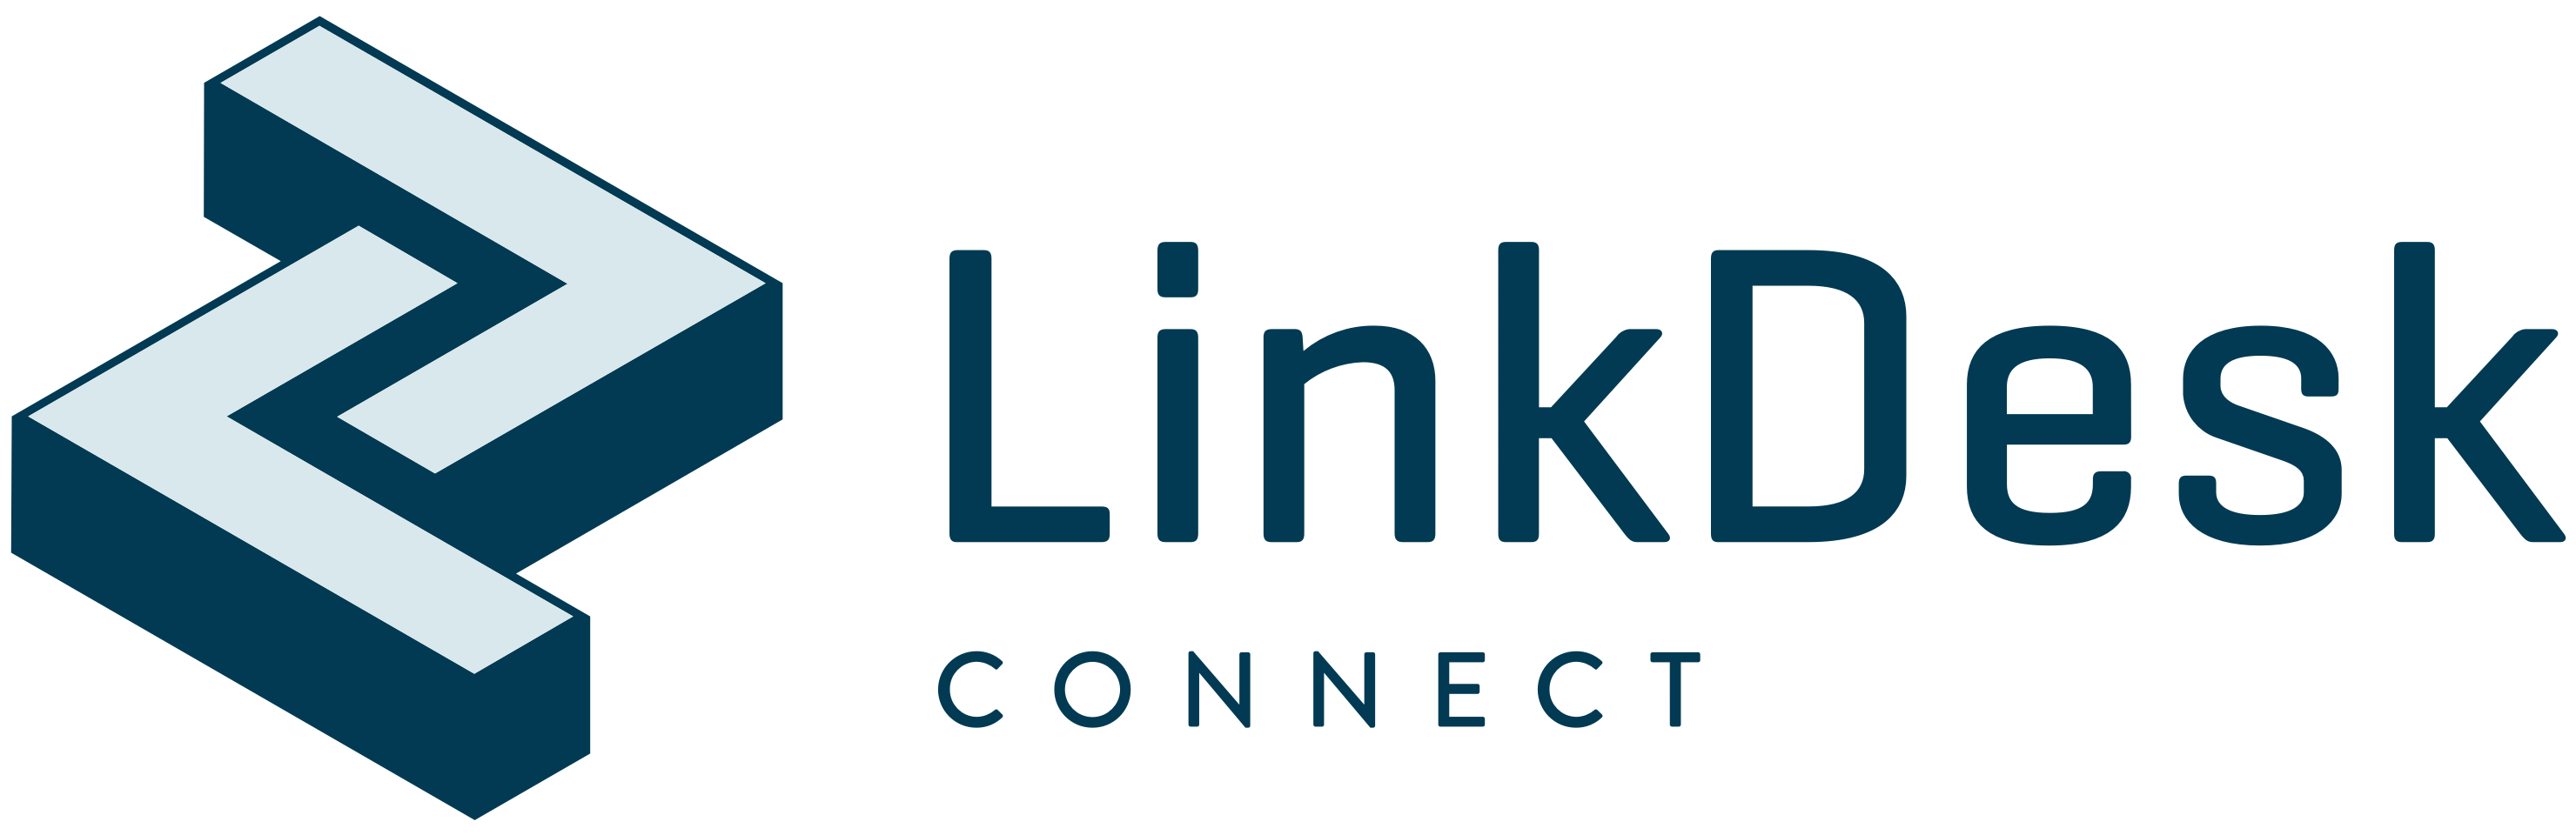 logotipo linkdesk connect